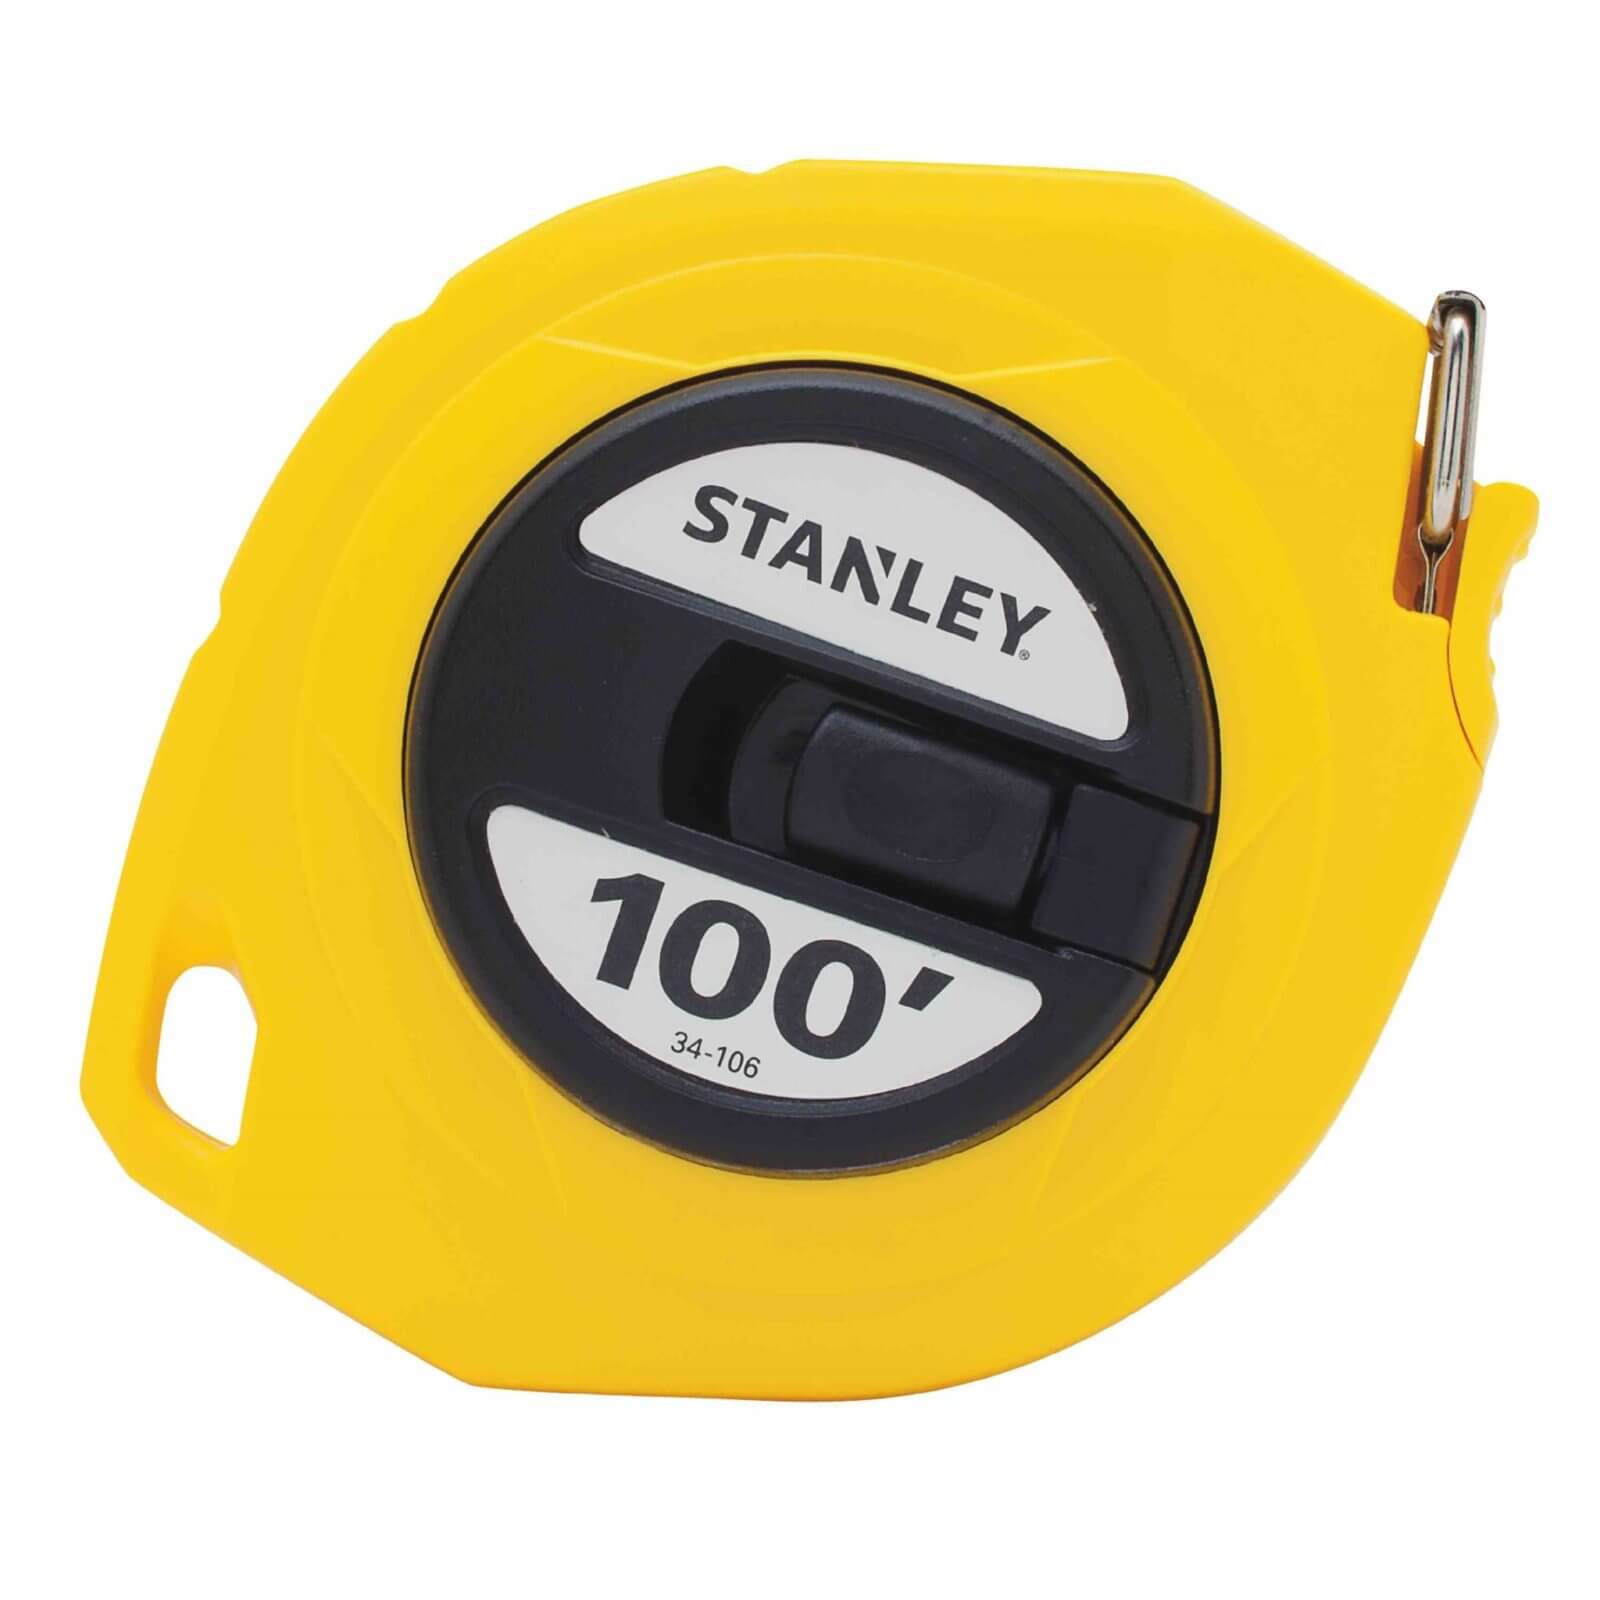 Stanley 100' Long Tape Measure